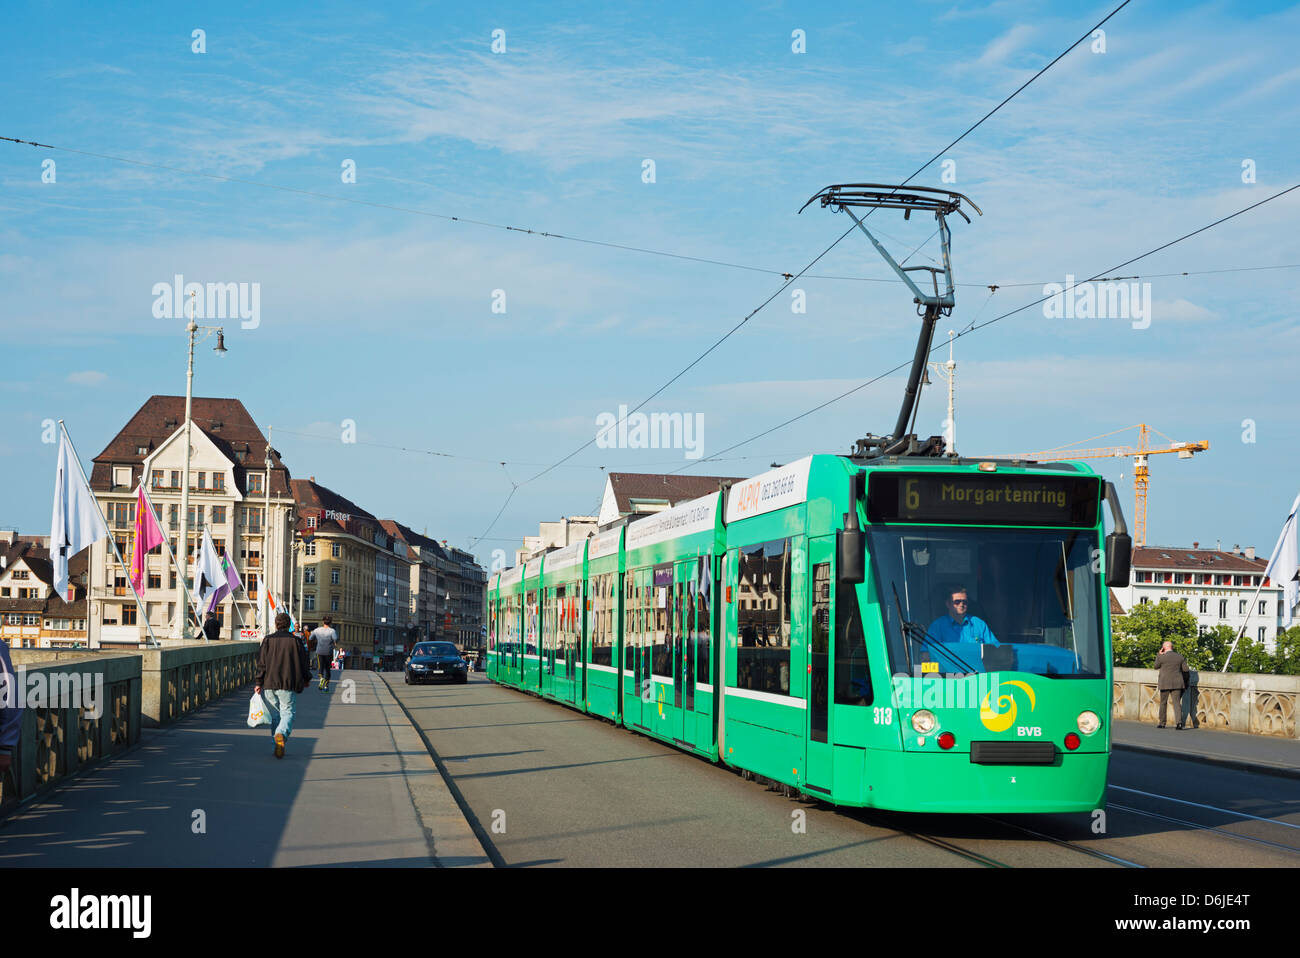 Centro citta' Tram, Basilea, Svizzera, Europa Foto Stock